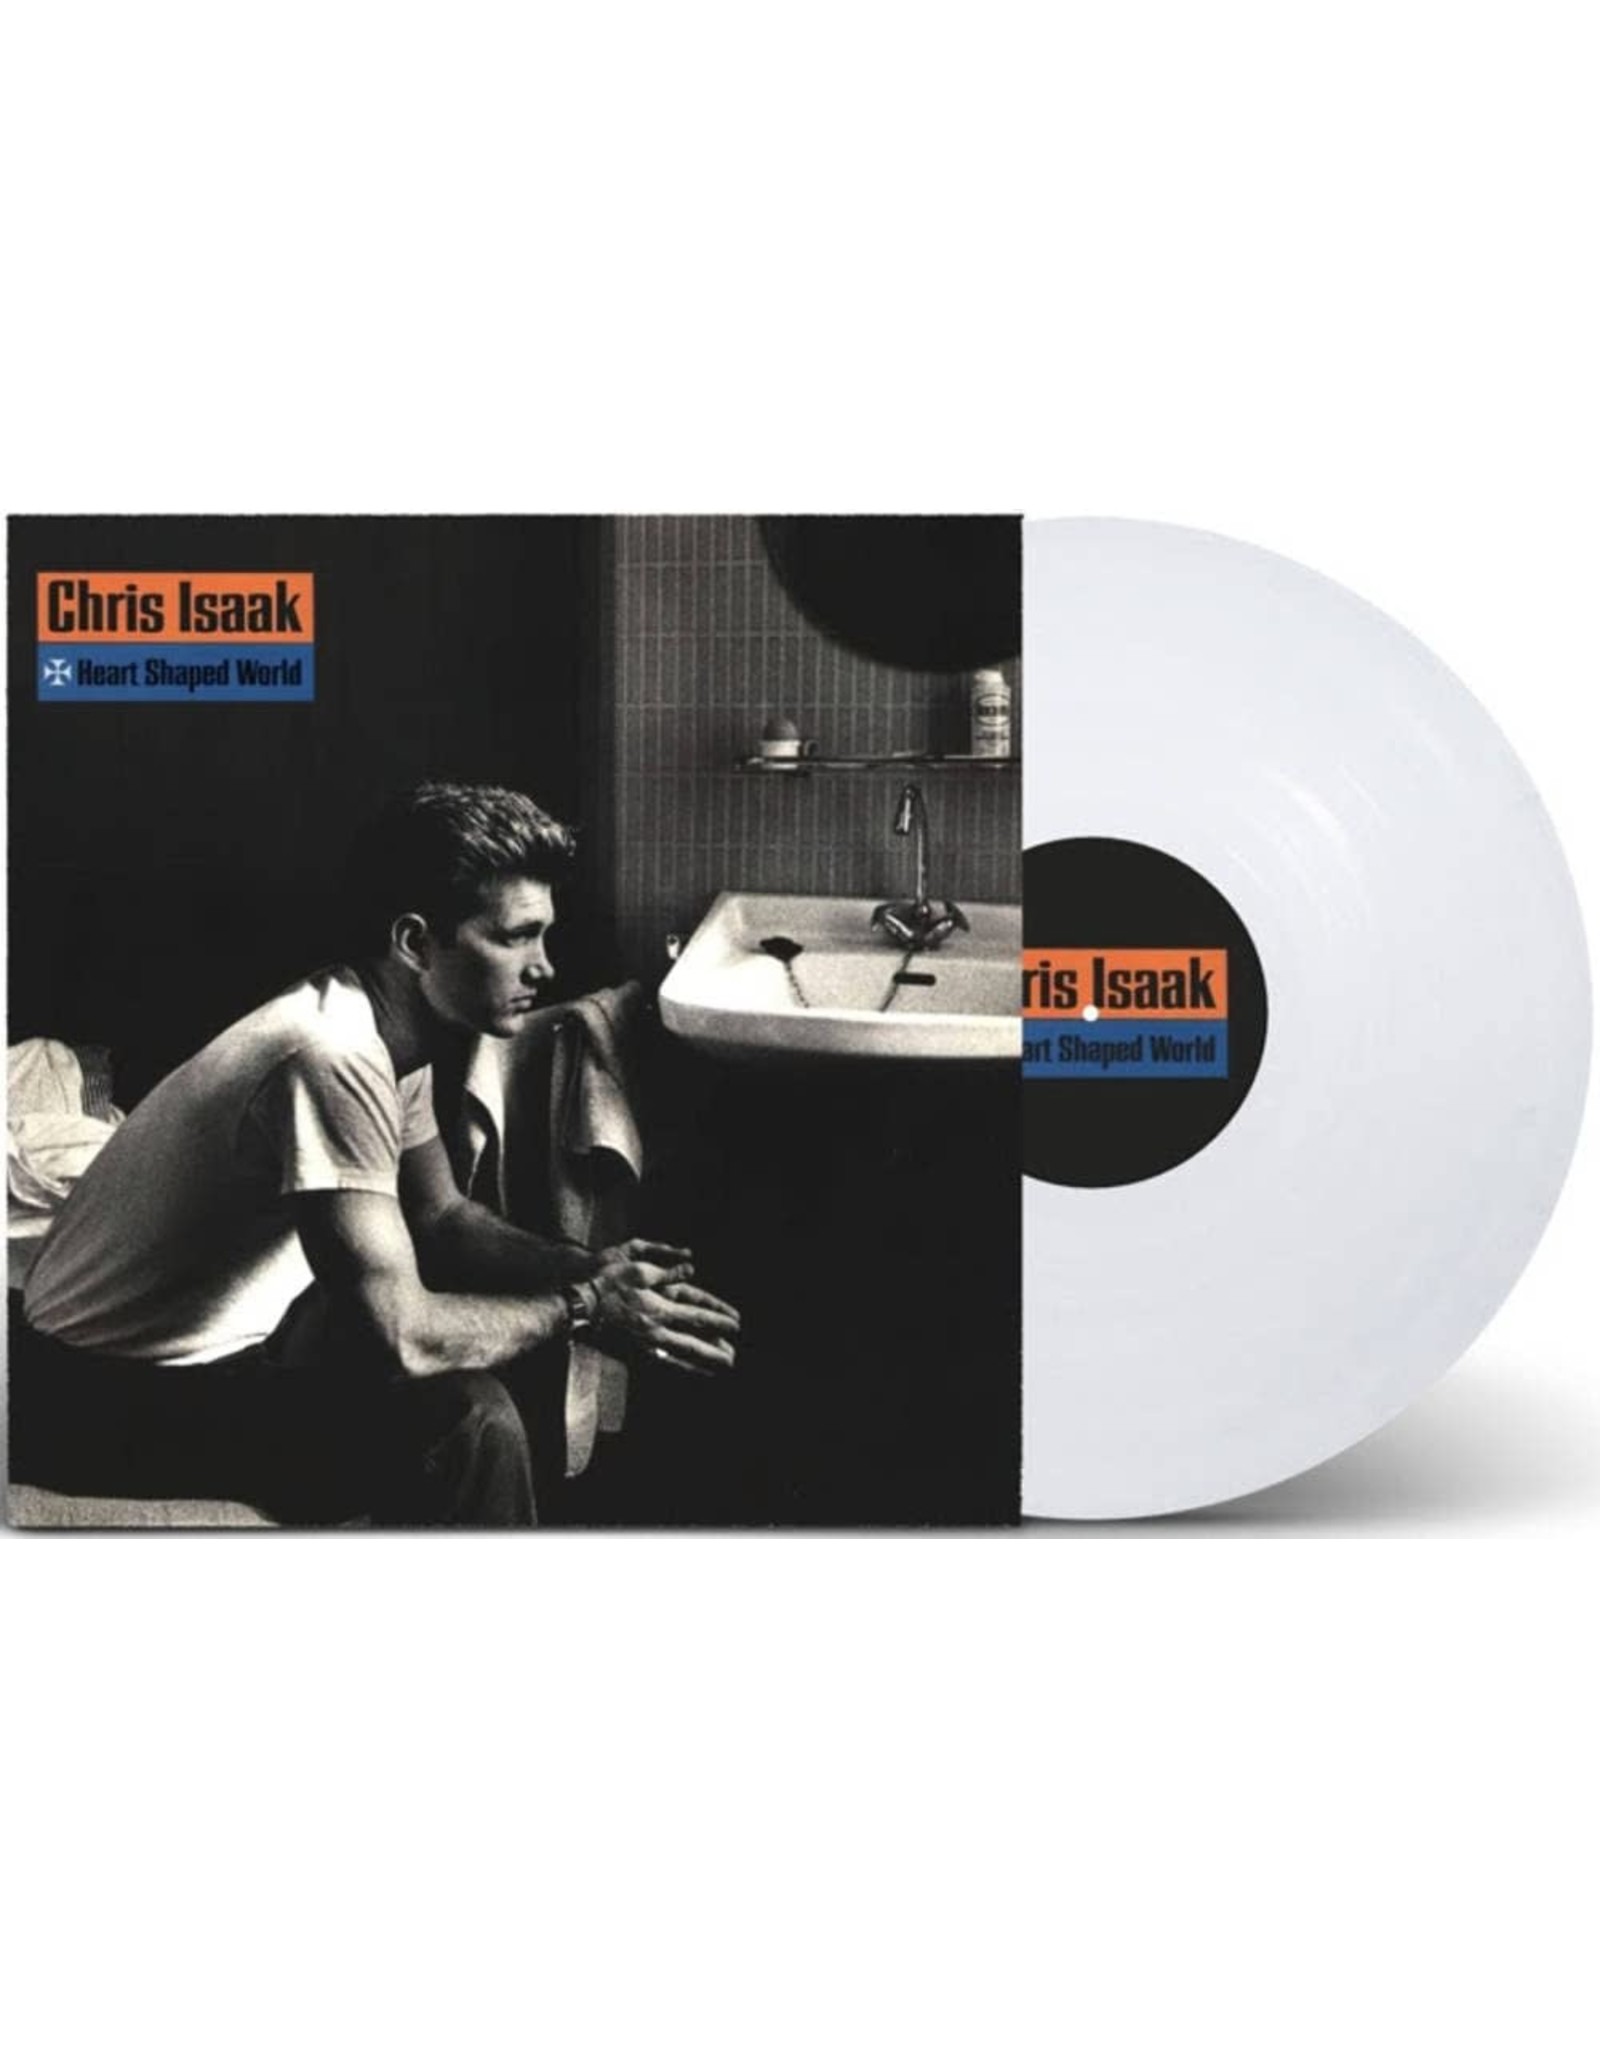 Chris Isaak - Heart Shaped World (Exclusive White Vinyl)